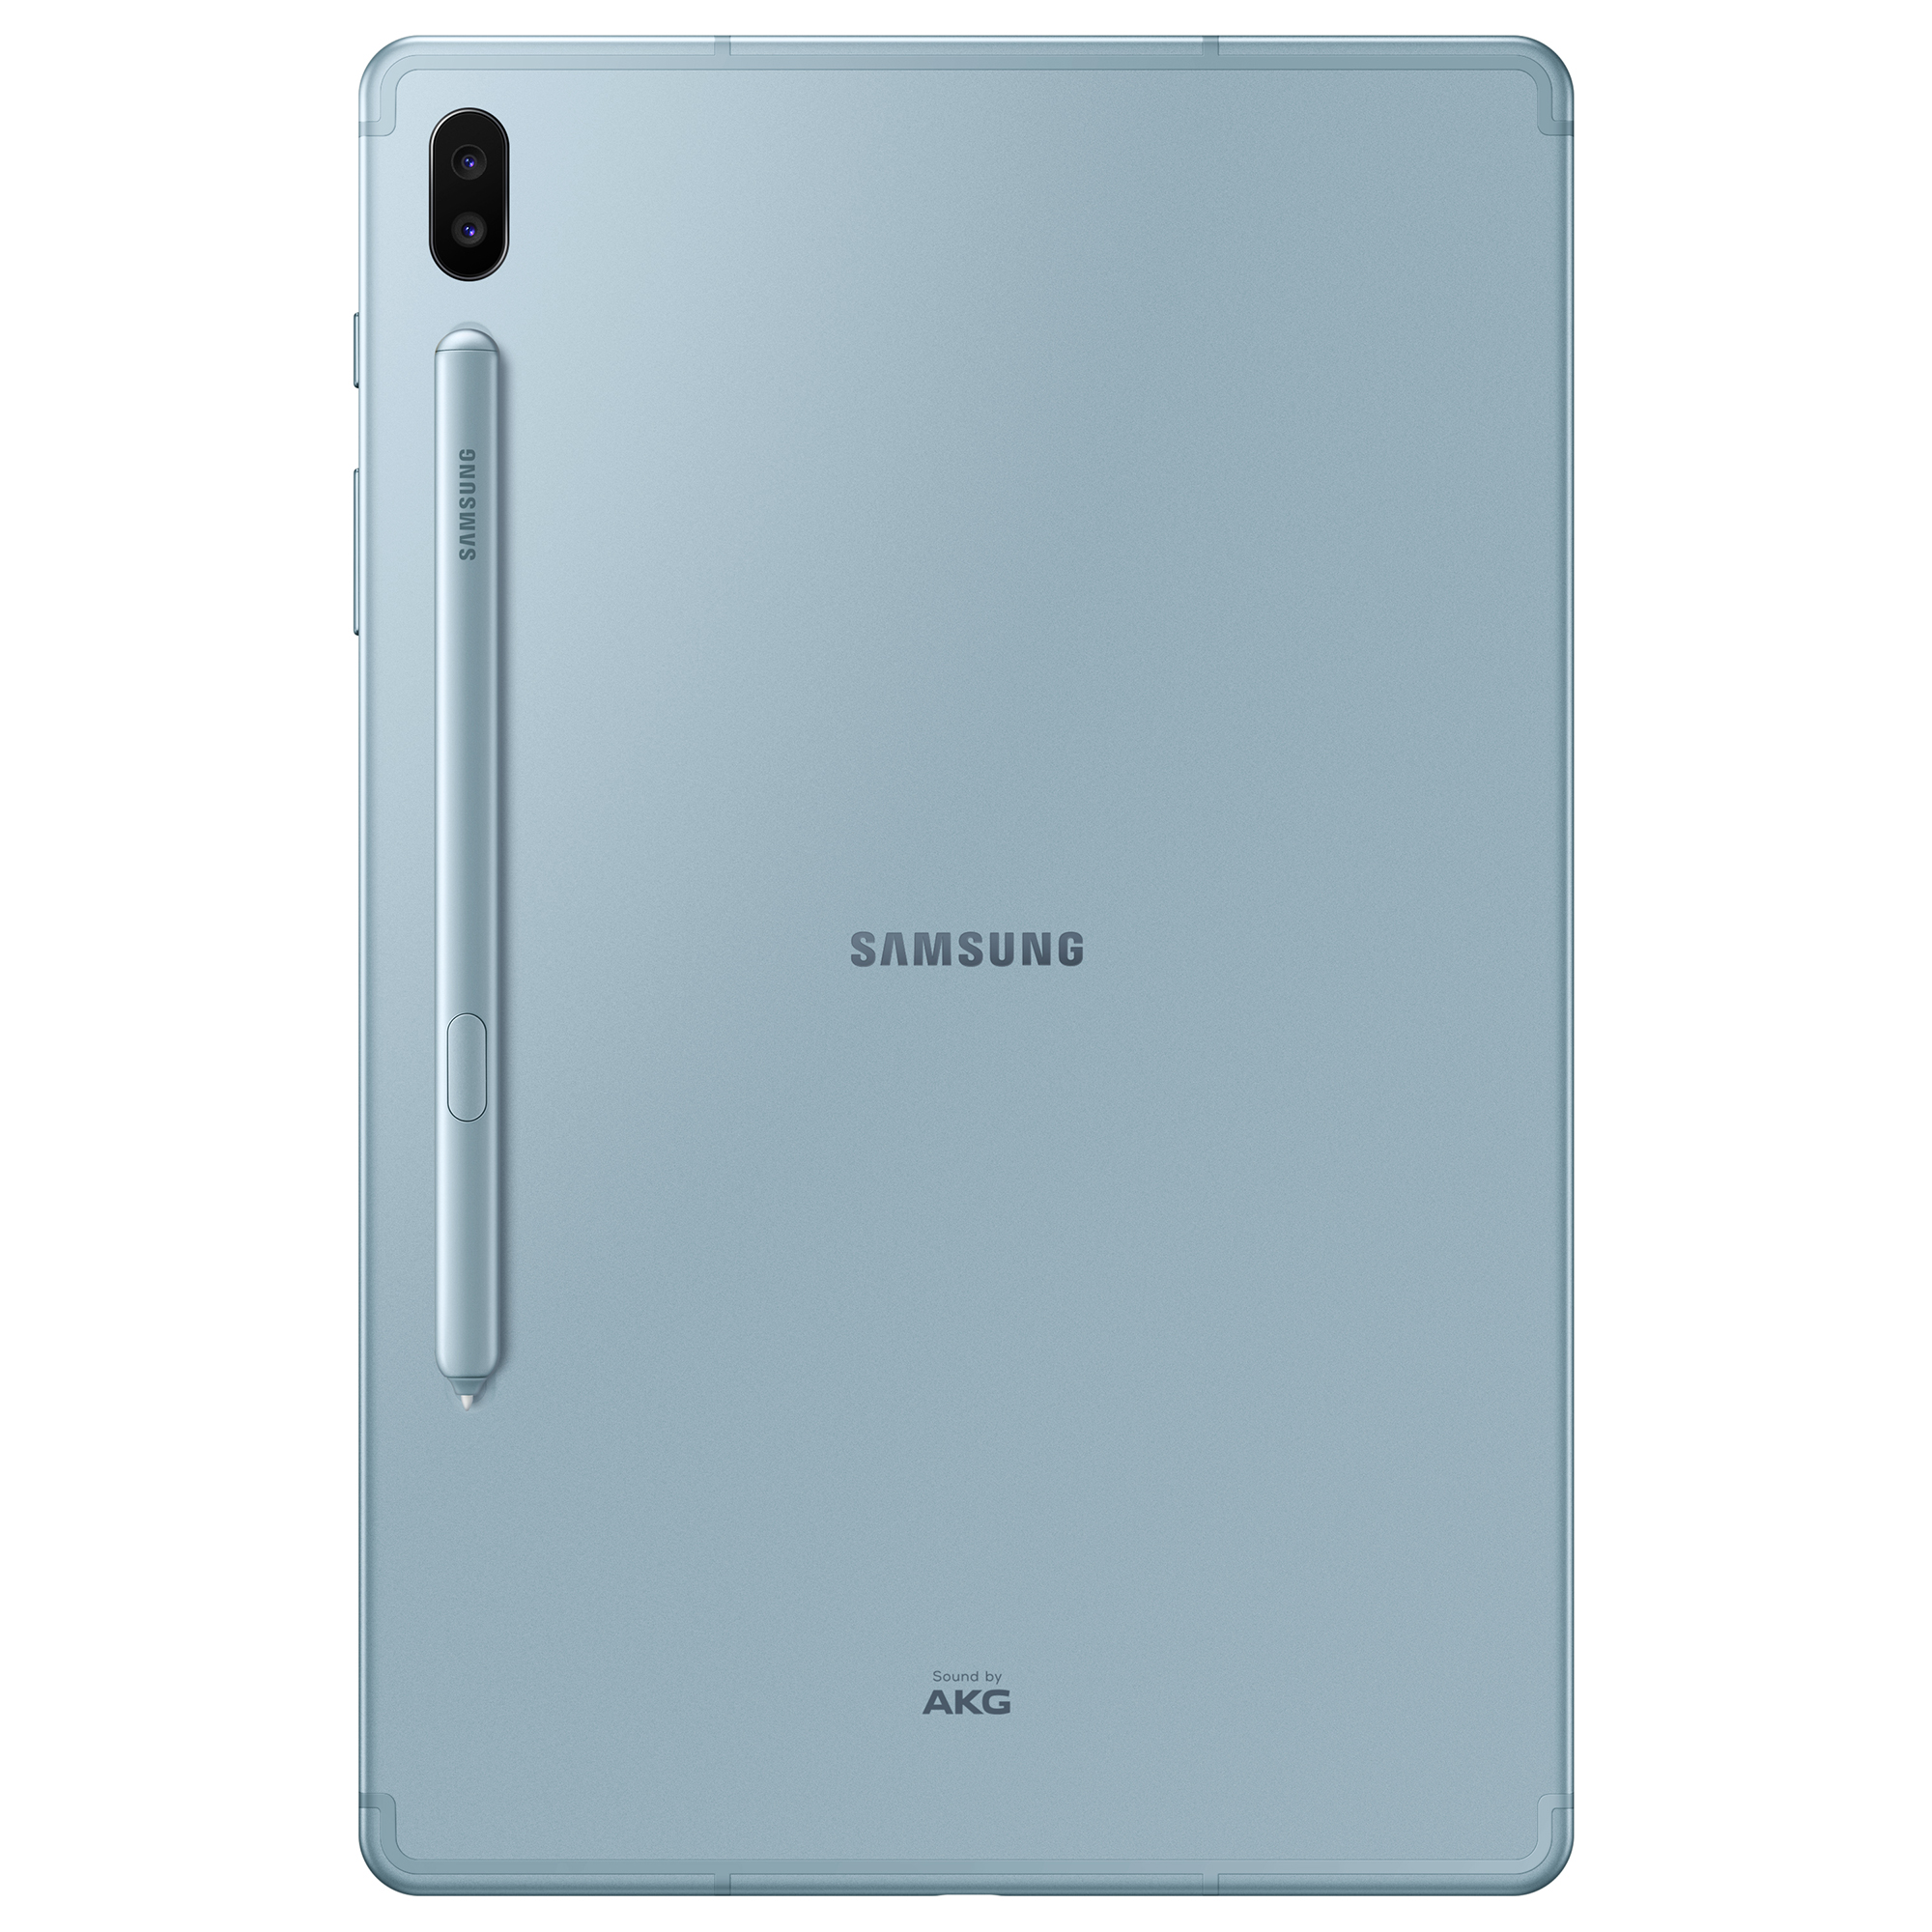 Samsung Galaxy Tab S6 Lite Lte Купить